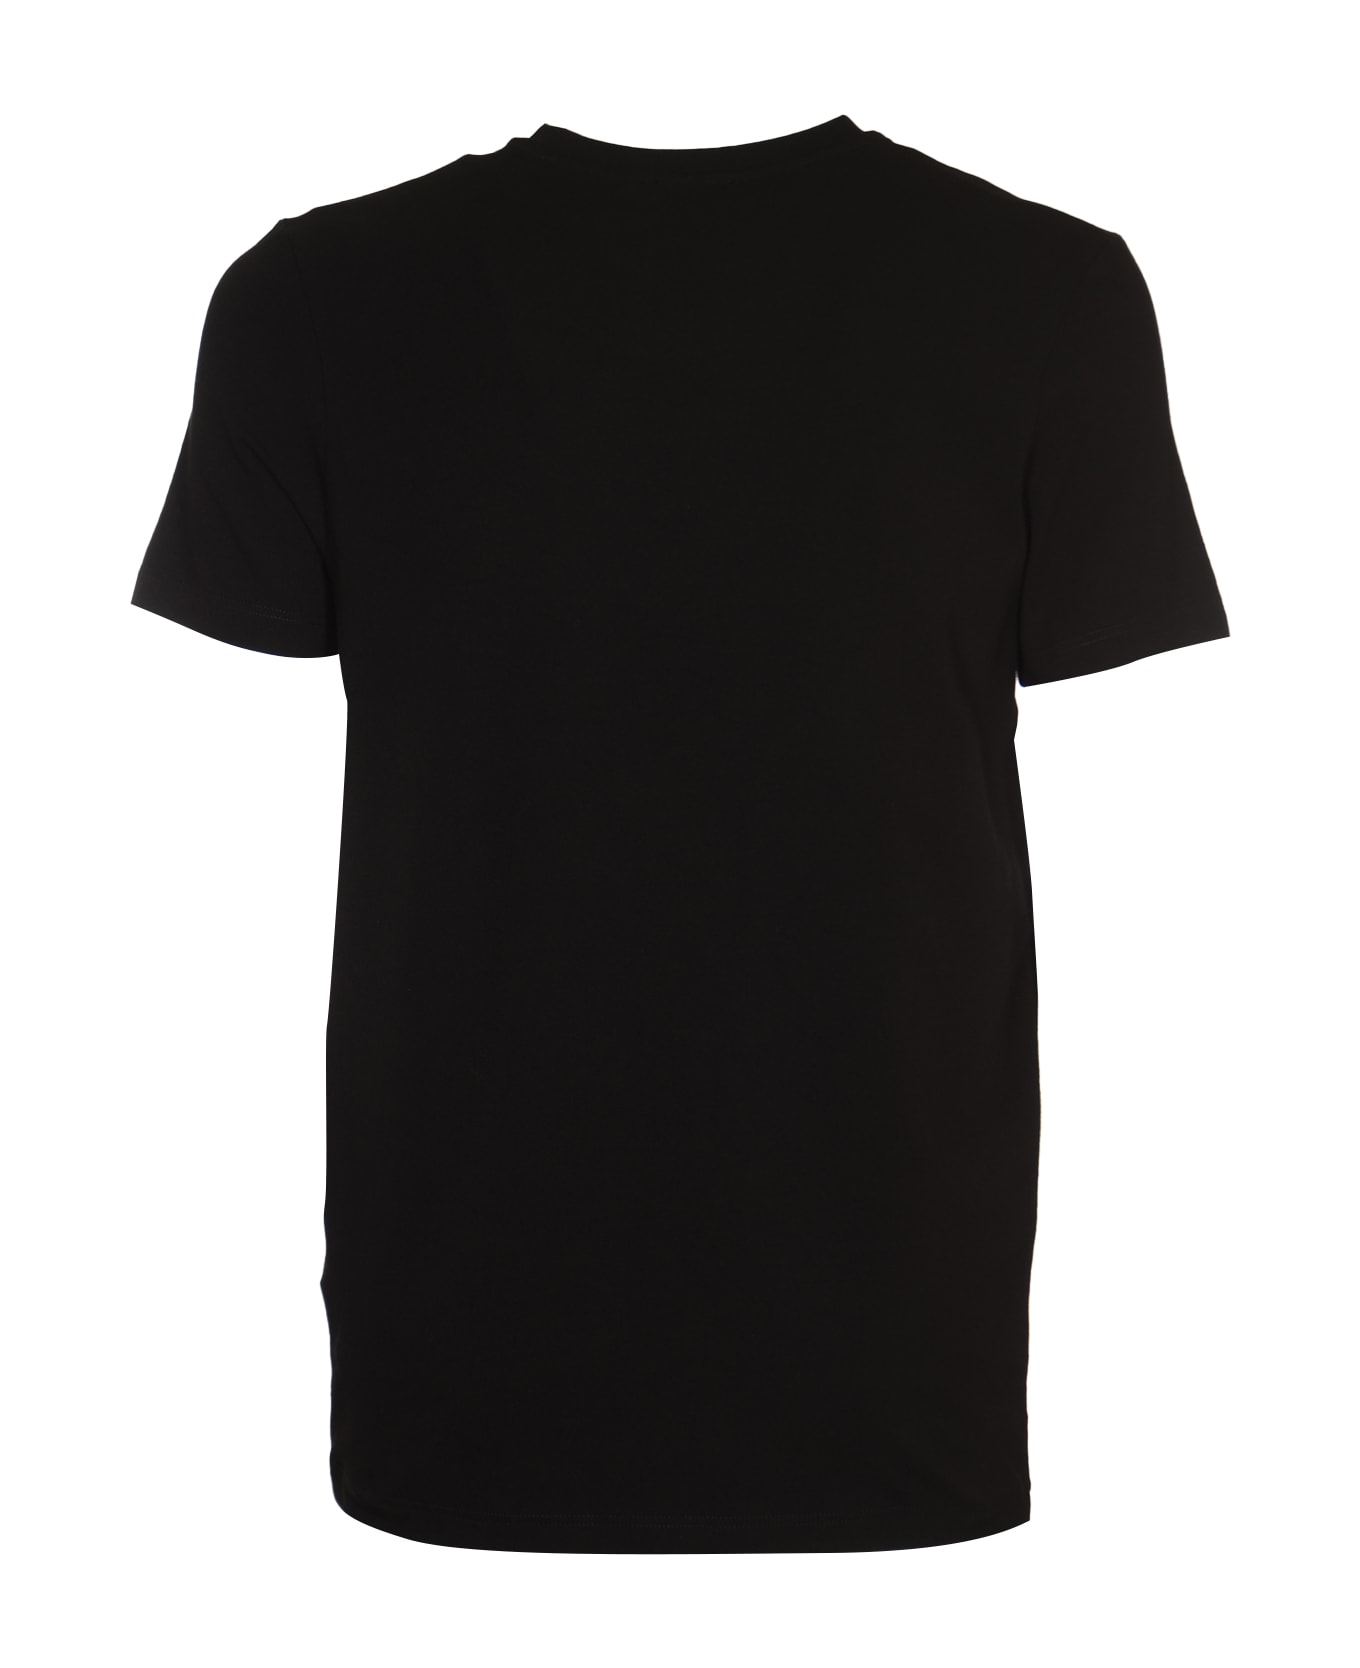 Dondup Round Neck T-shirt - Black